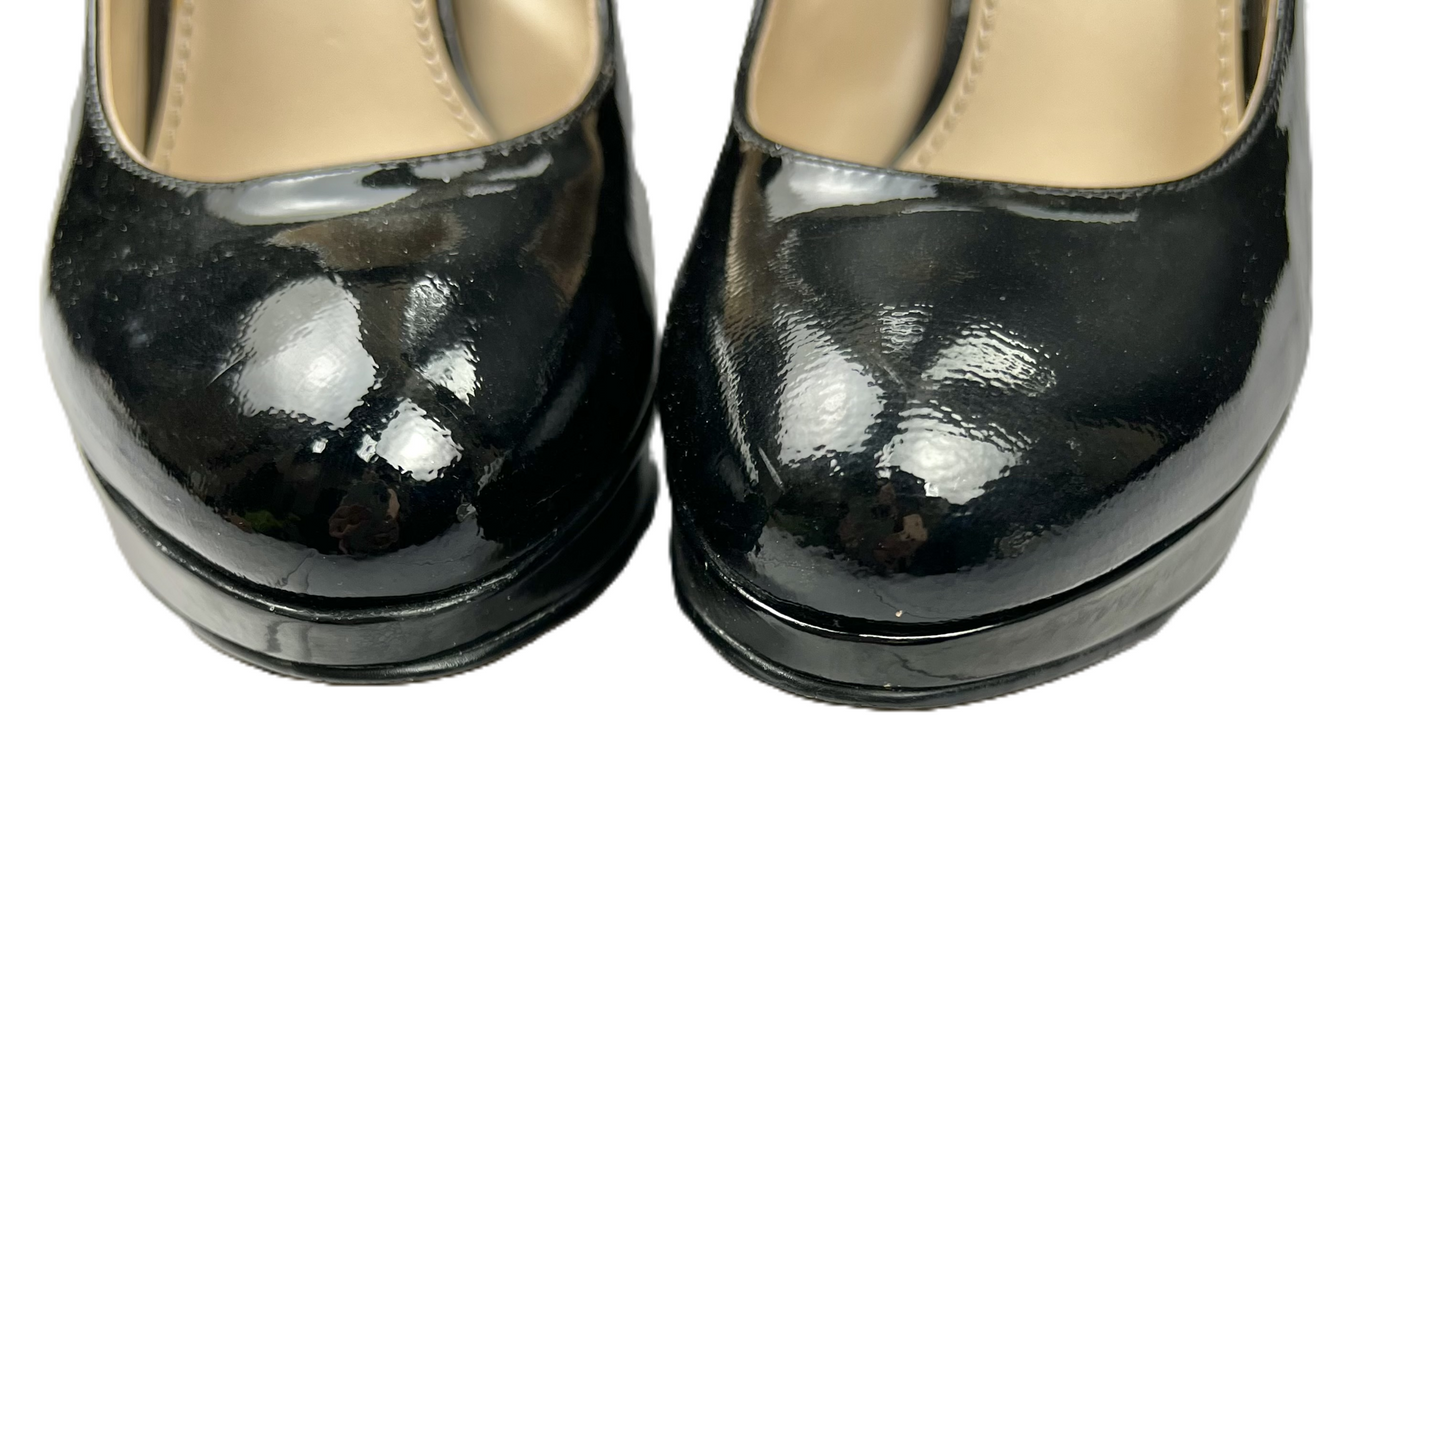 Black Shoes Heels Platform By Enzo Angiolini, Size: 8.5